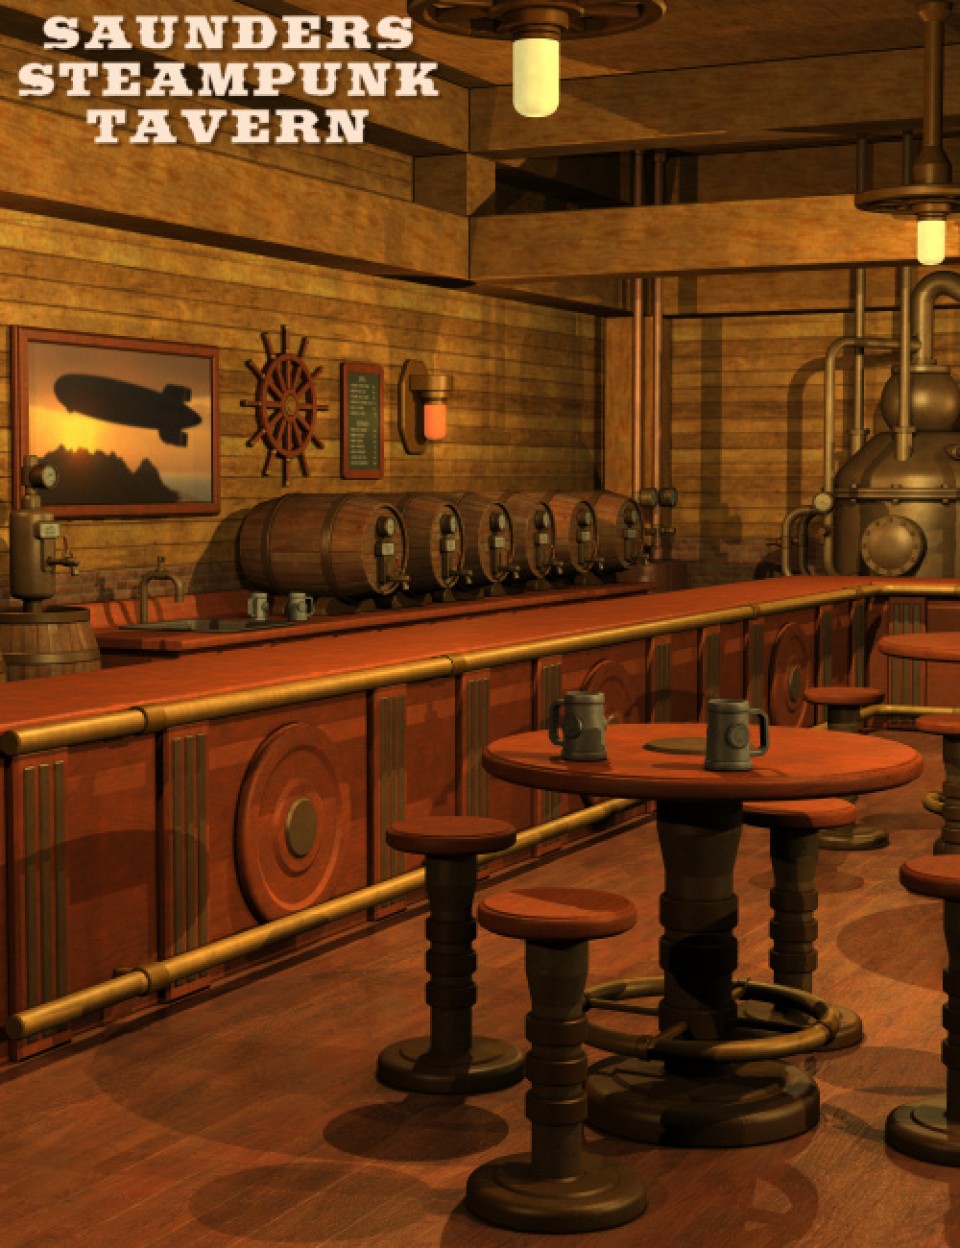 Saunders Steampunk Tavern